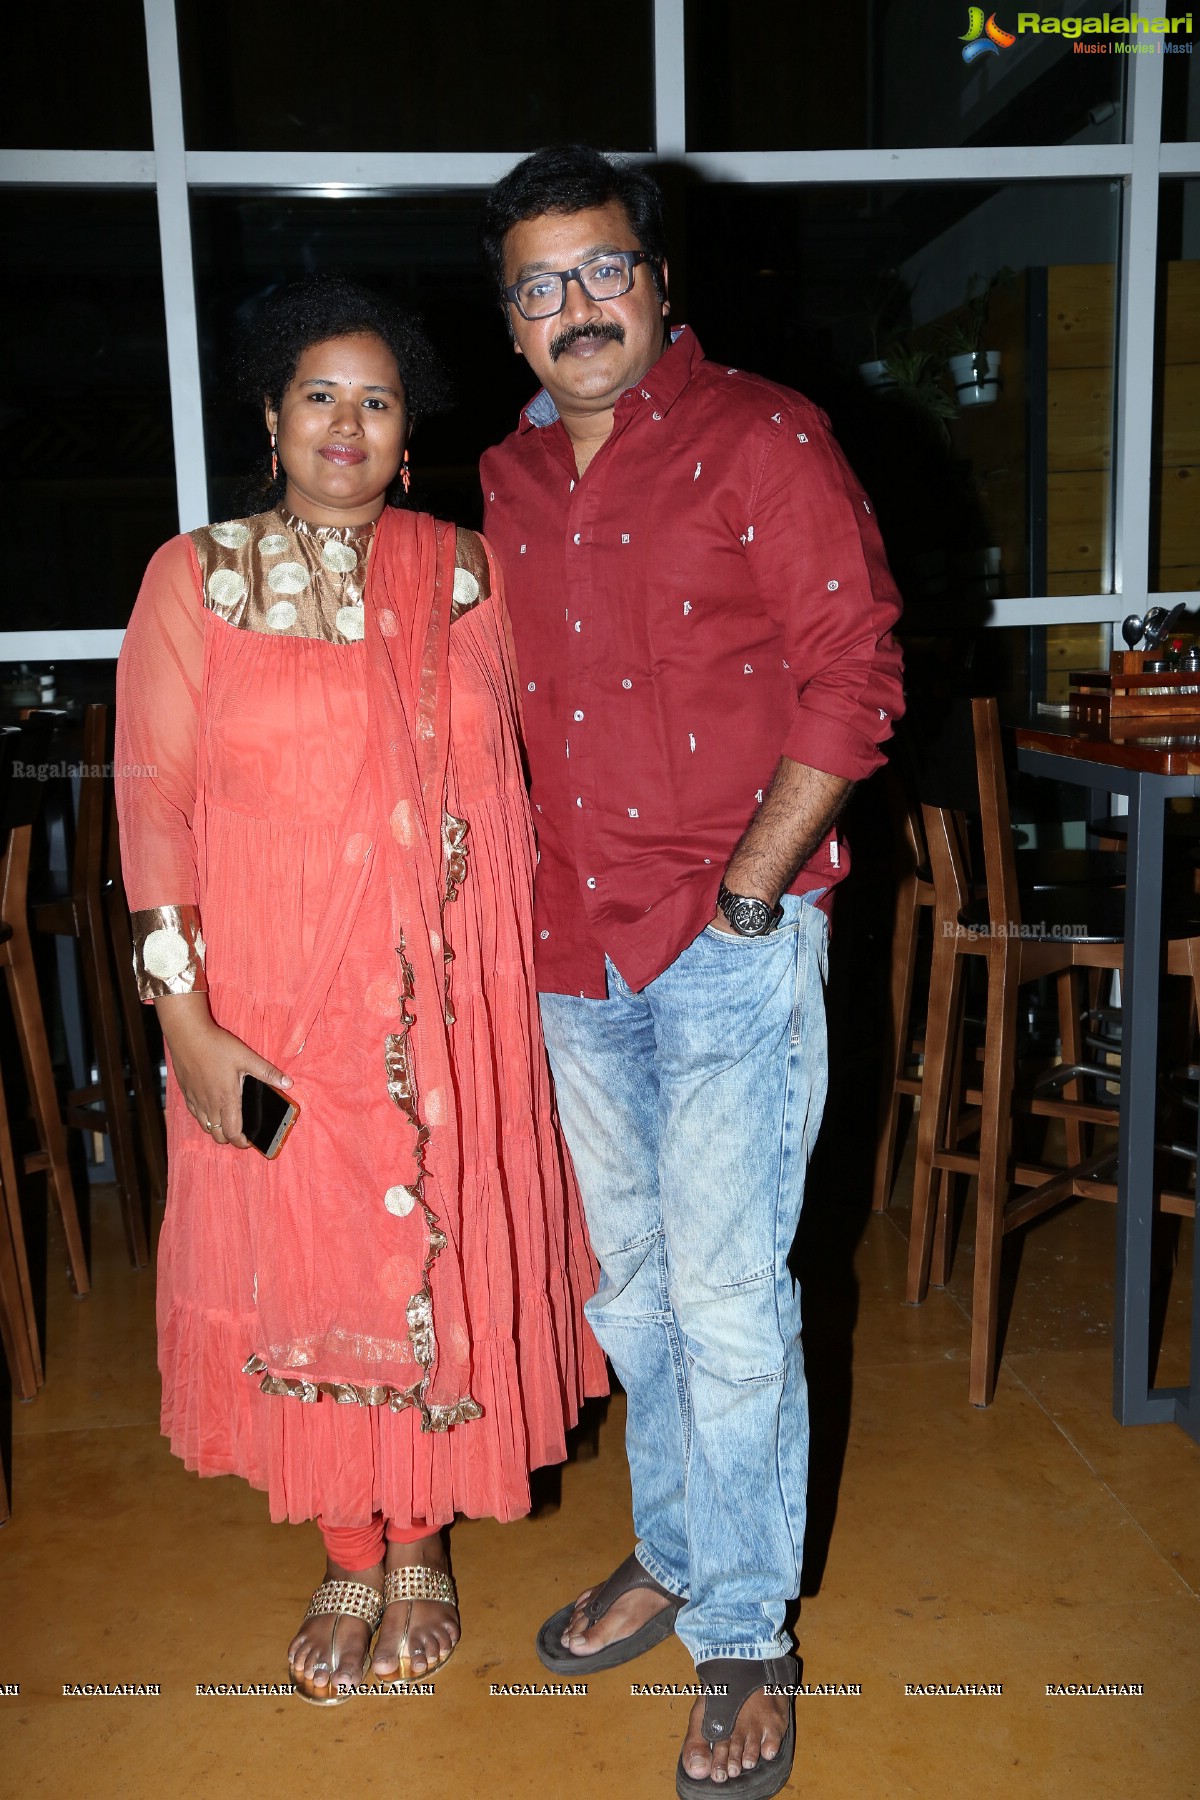 Akhil & Swetha's 12th Wedding Anniversary And Akhil's Bringing-In Birthday at Sound Garden Cafe, Kondapur in Hyderabad